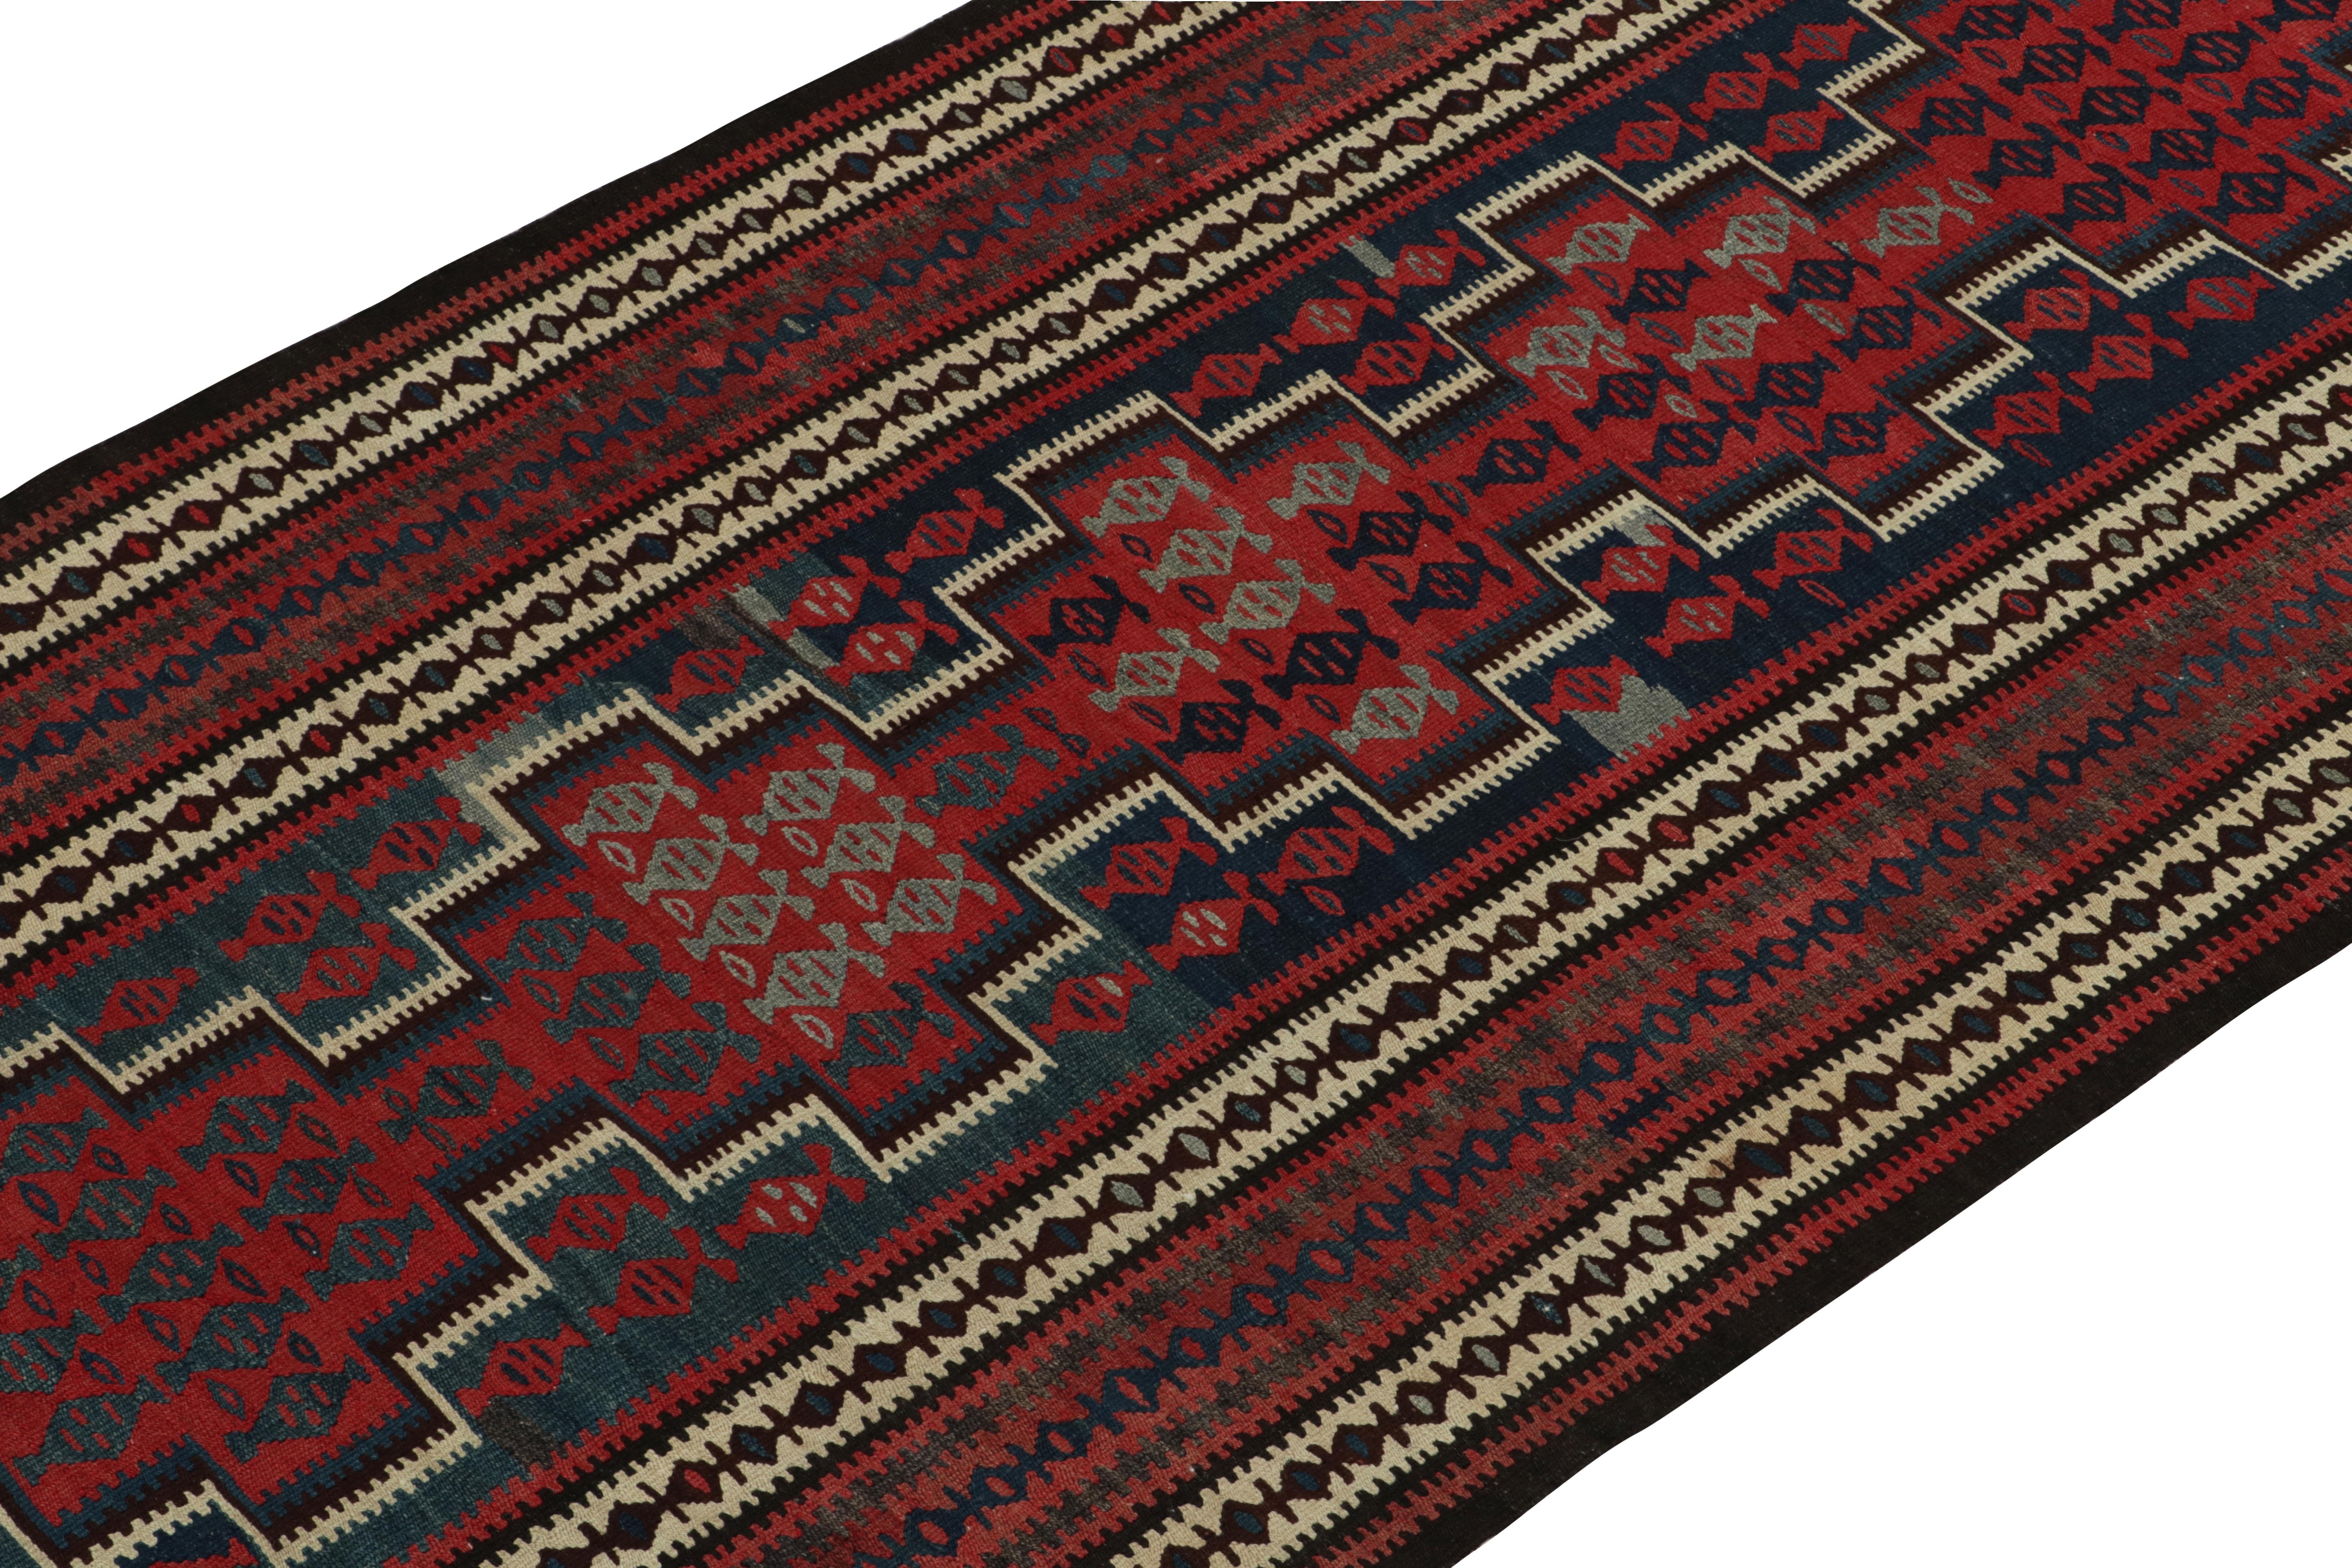 Turkish 1950s Vintage Kilim rug in Red, Blue and Brown Geometric Patterns by Rug & Kilim For Sale